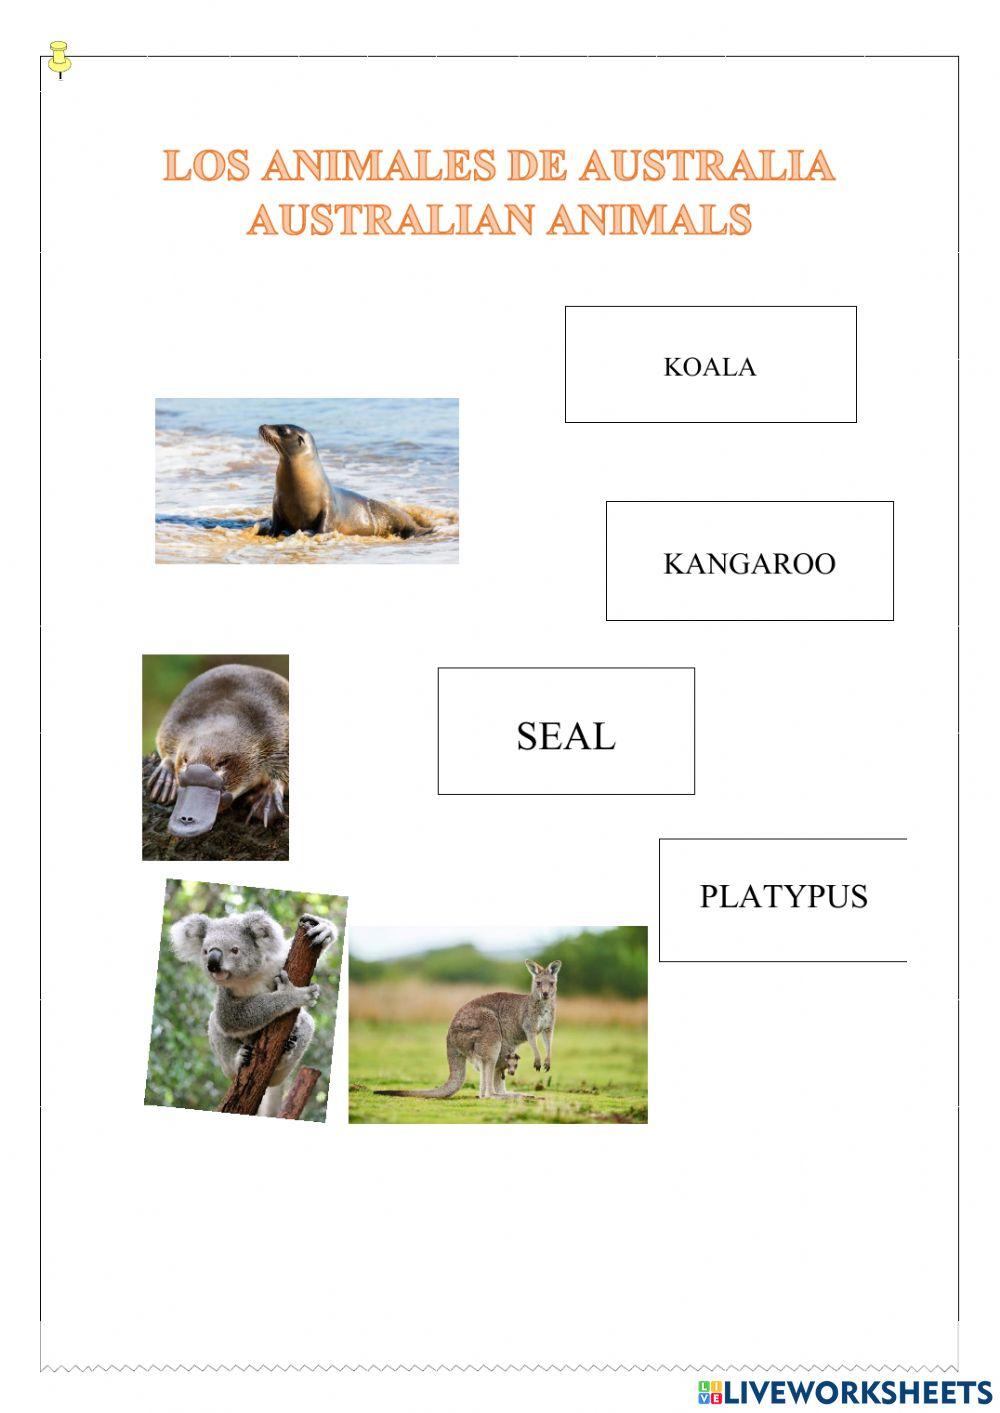 Los animales australianos